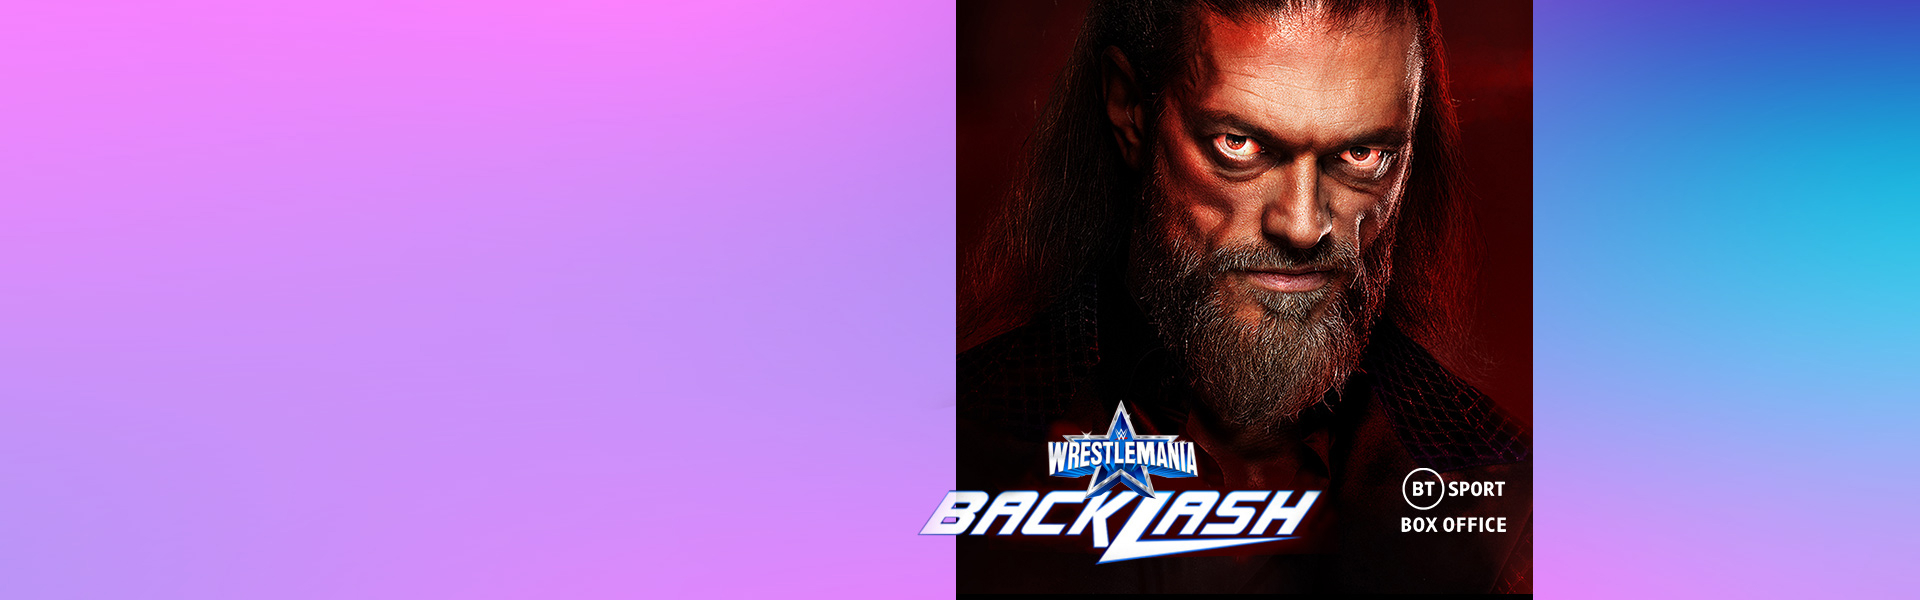 Watch WWE WrestleMania Backlash on BT Sport Box Office